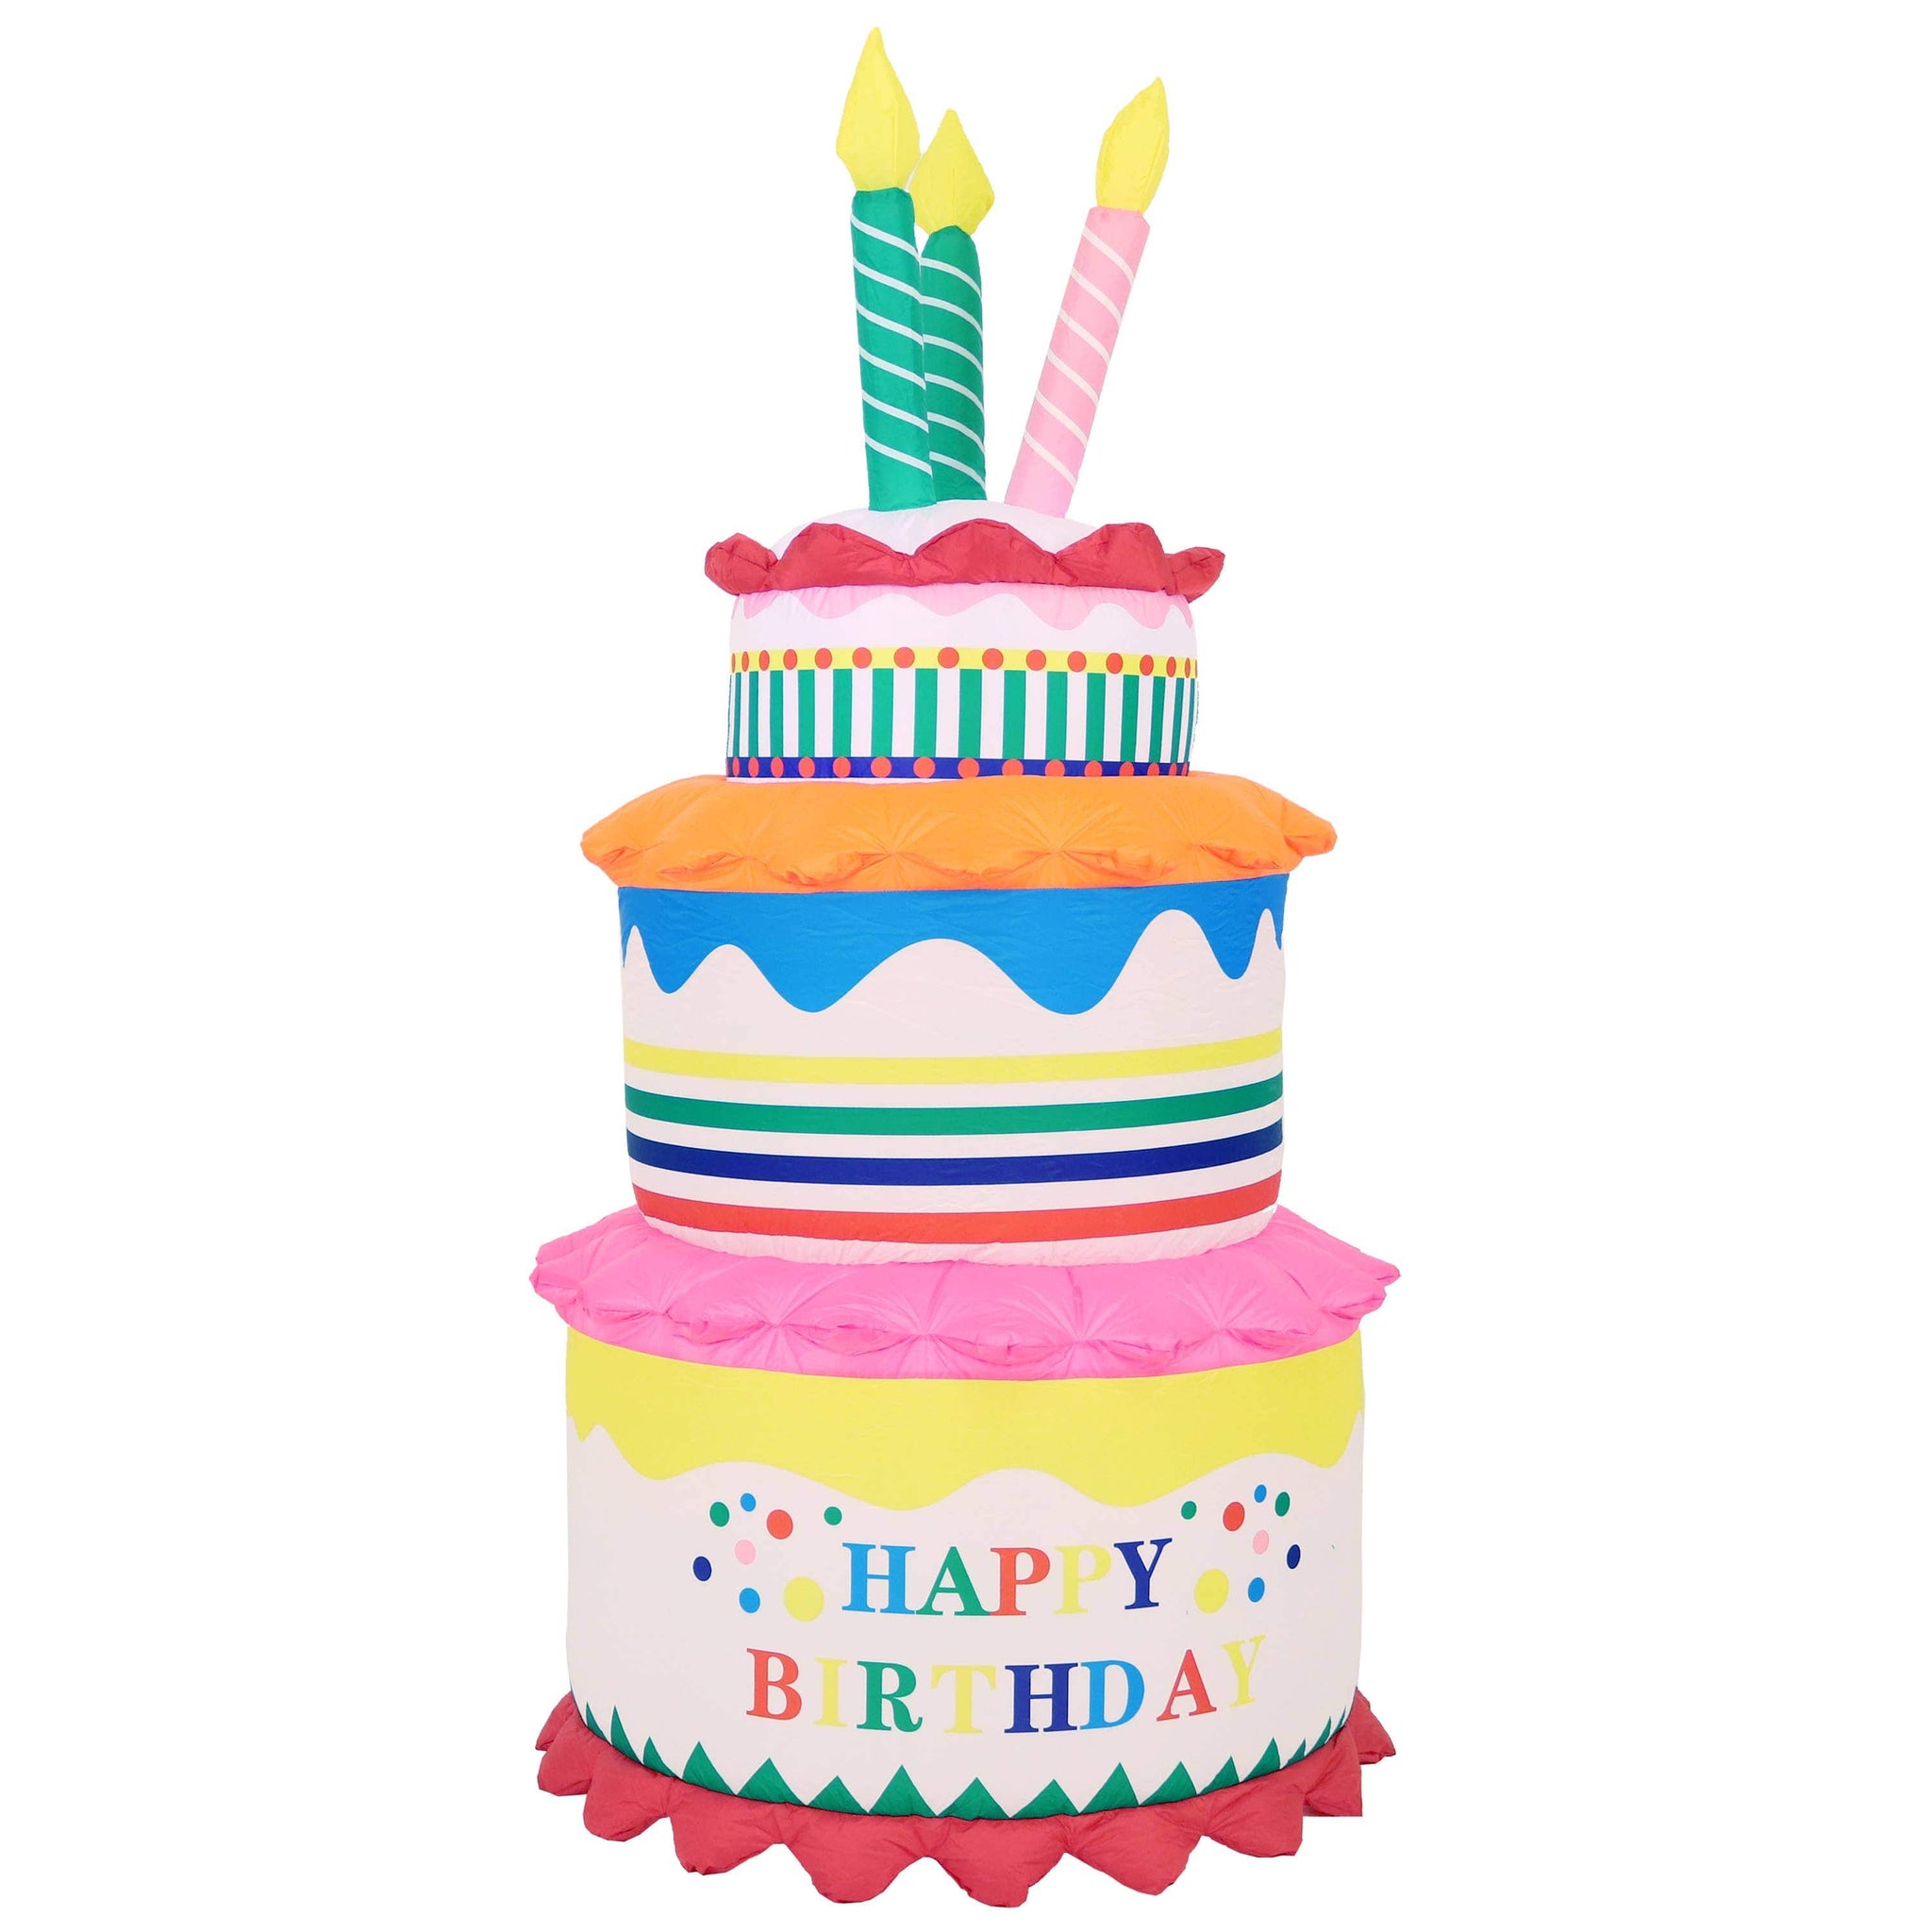 Sunnydaze Decor Sunnydaze Inflatable Birthday Cake Decoration - 6-Foot